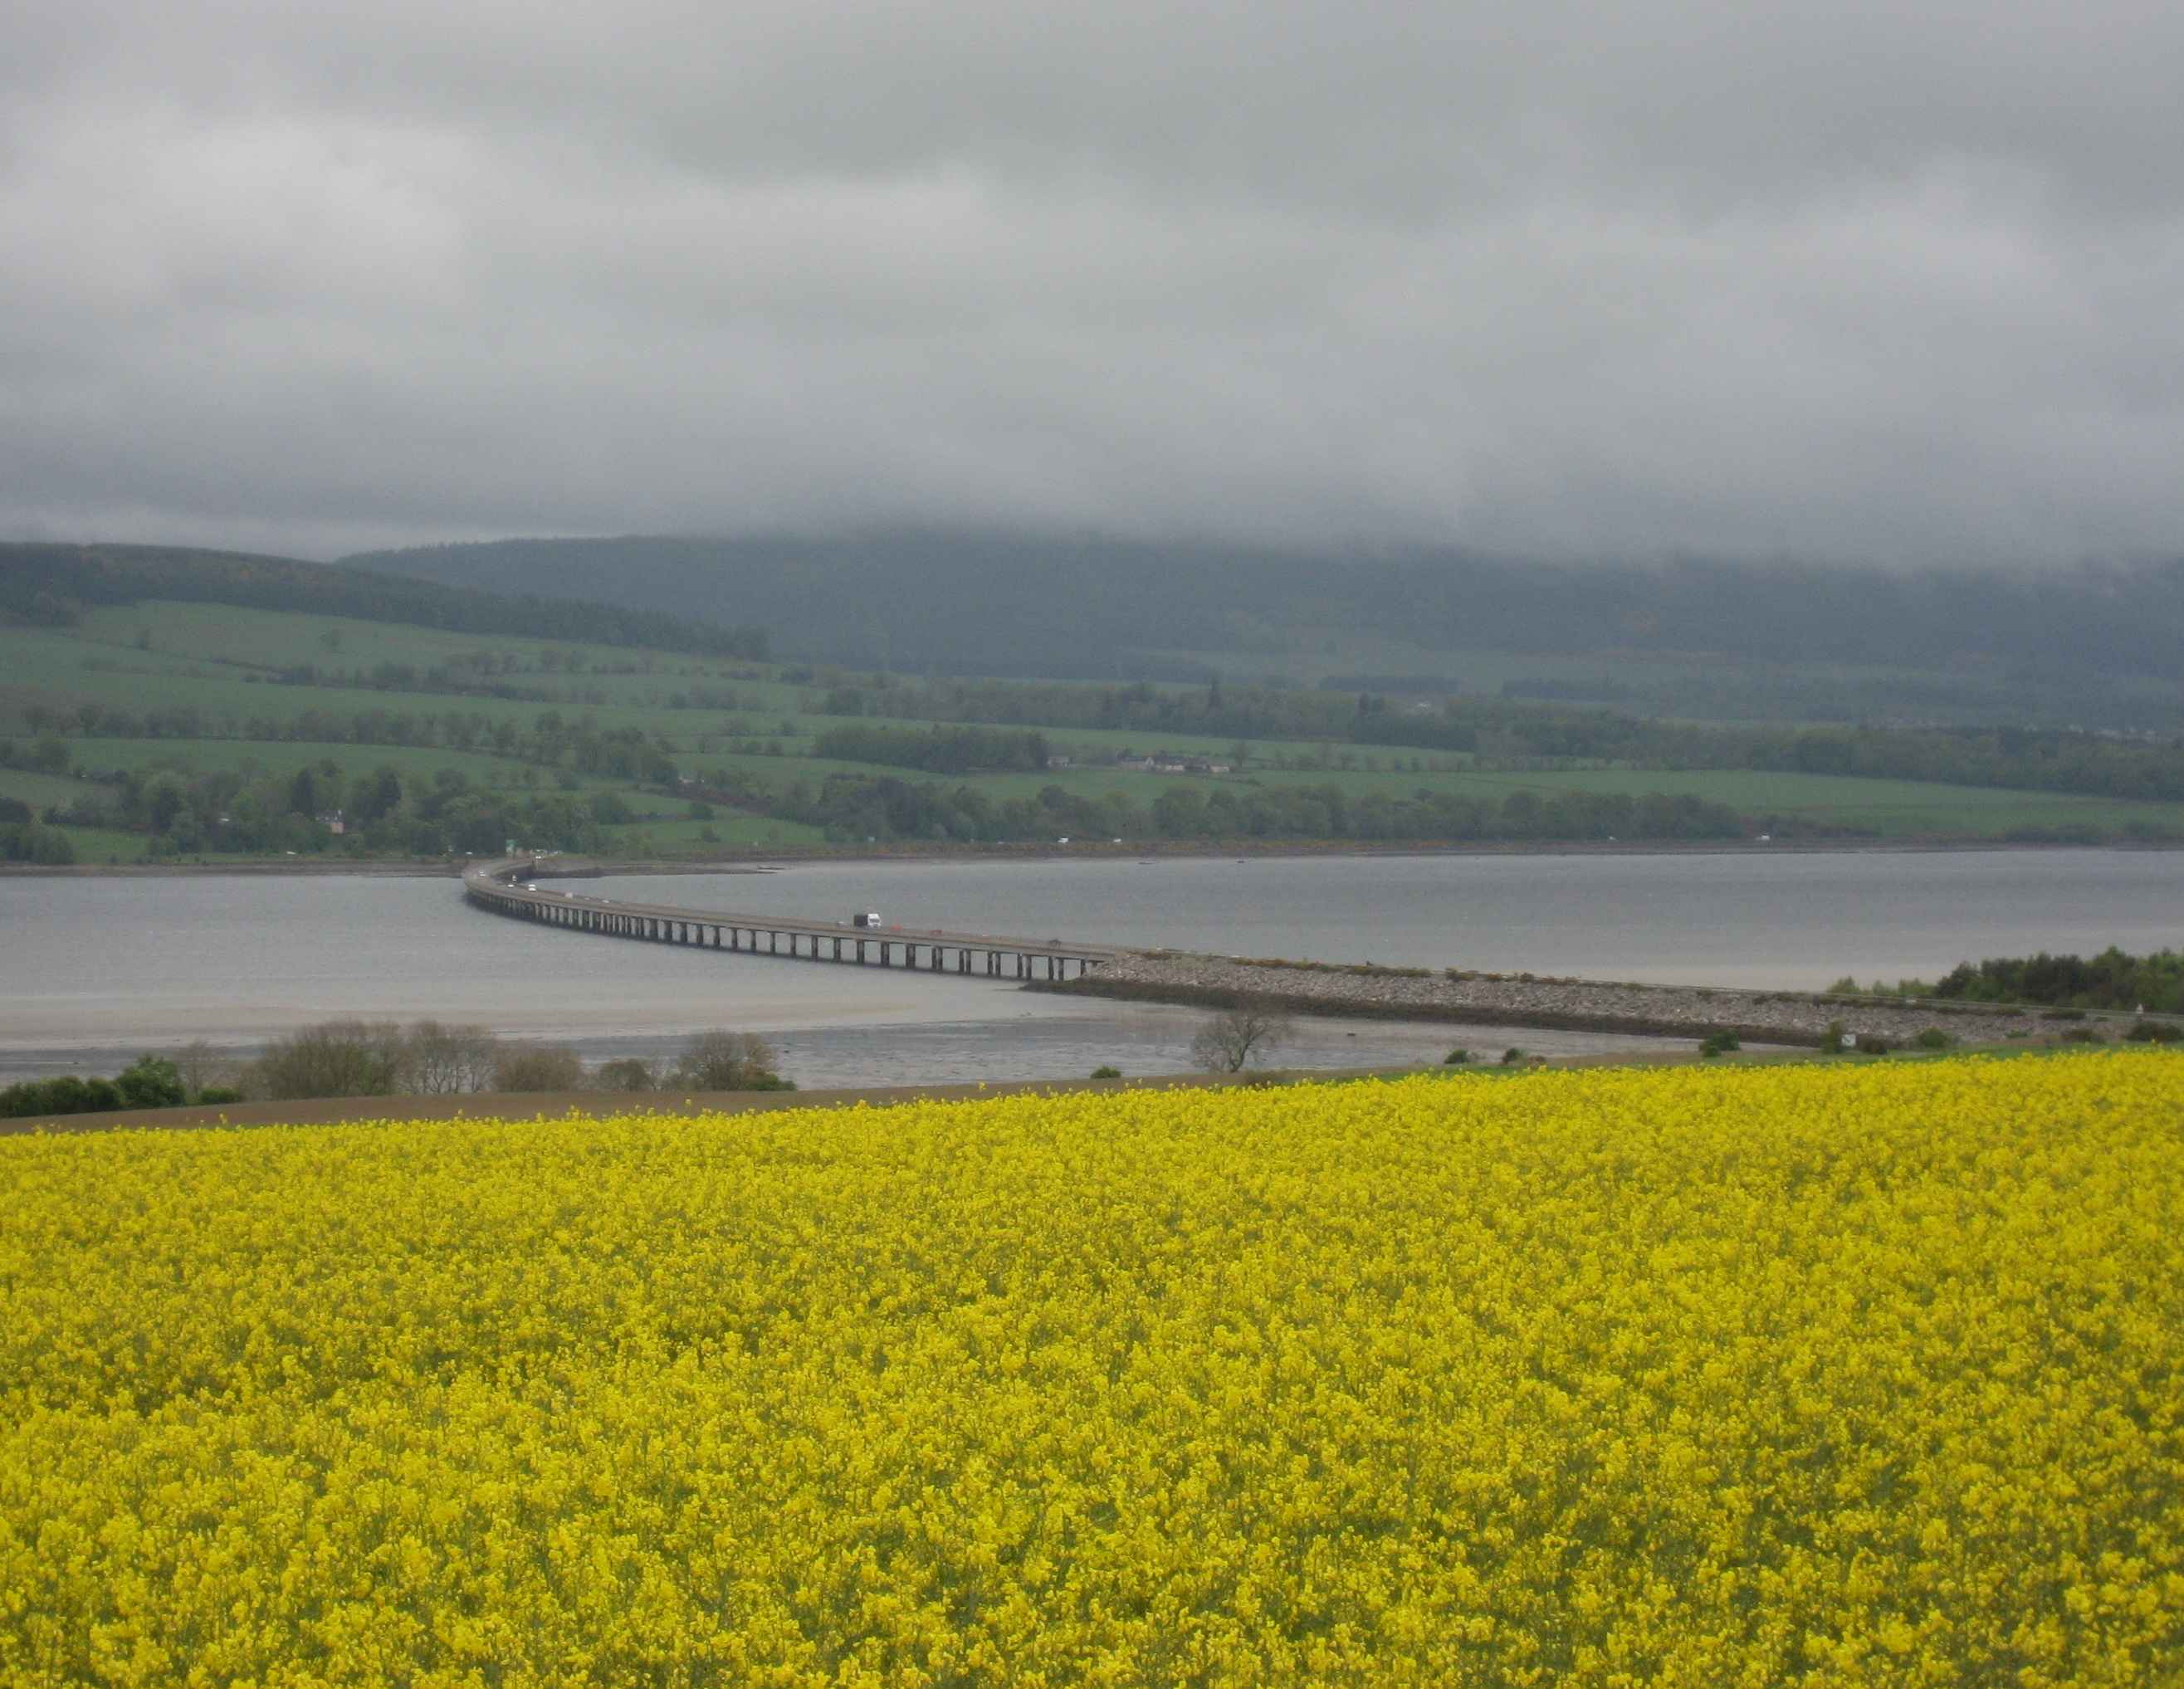 DN50 Cromarty Firth bridge from afar